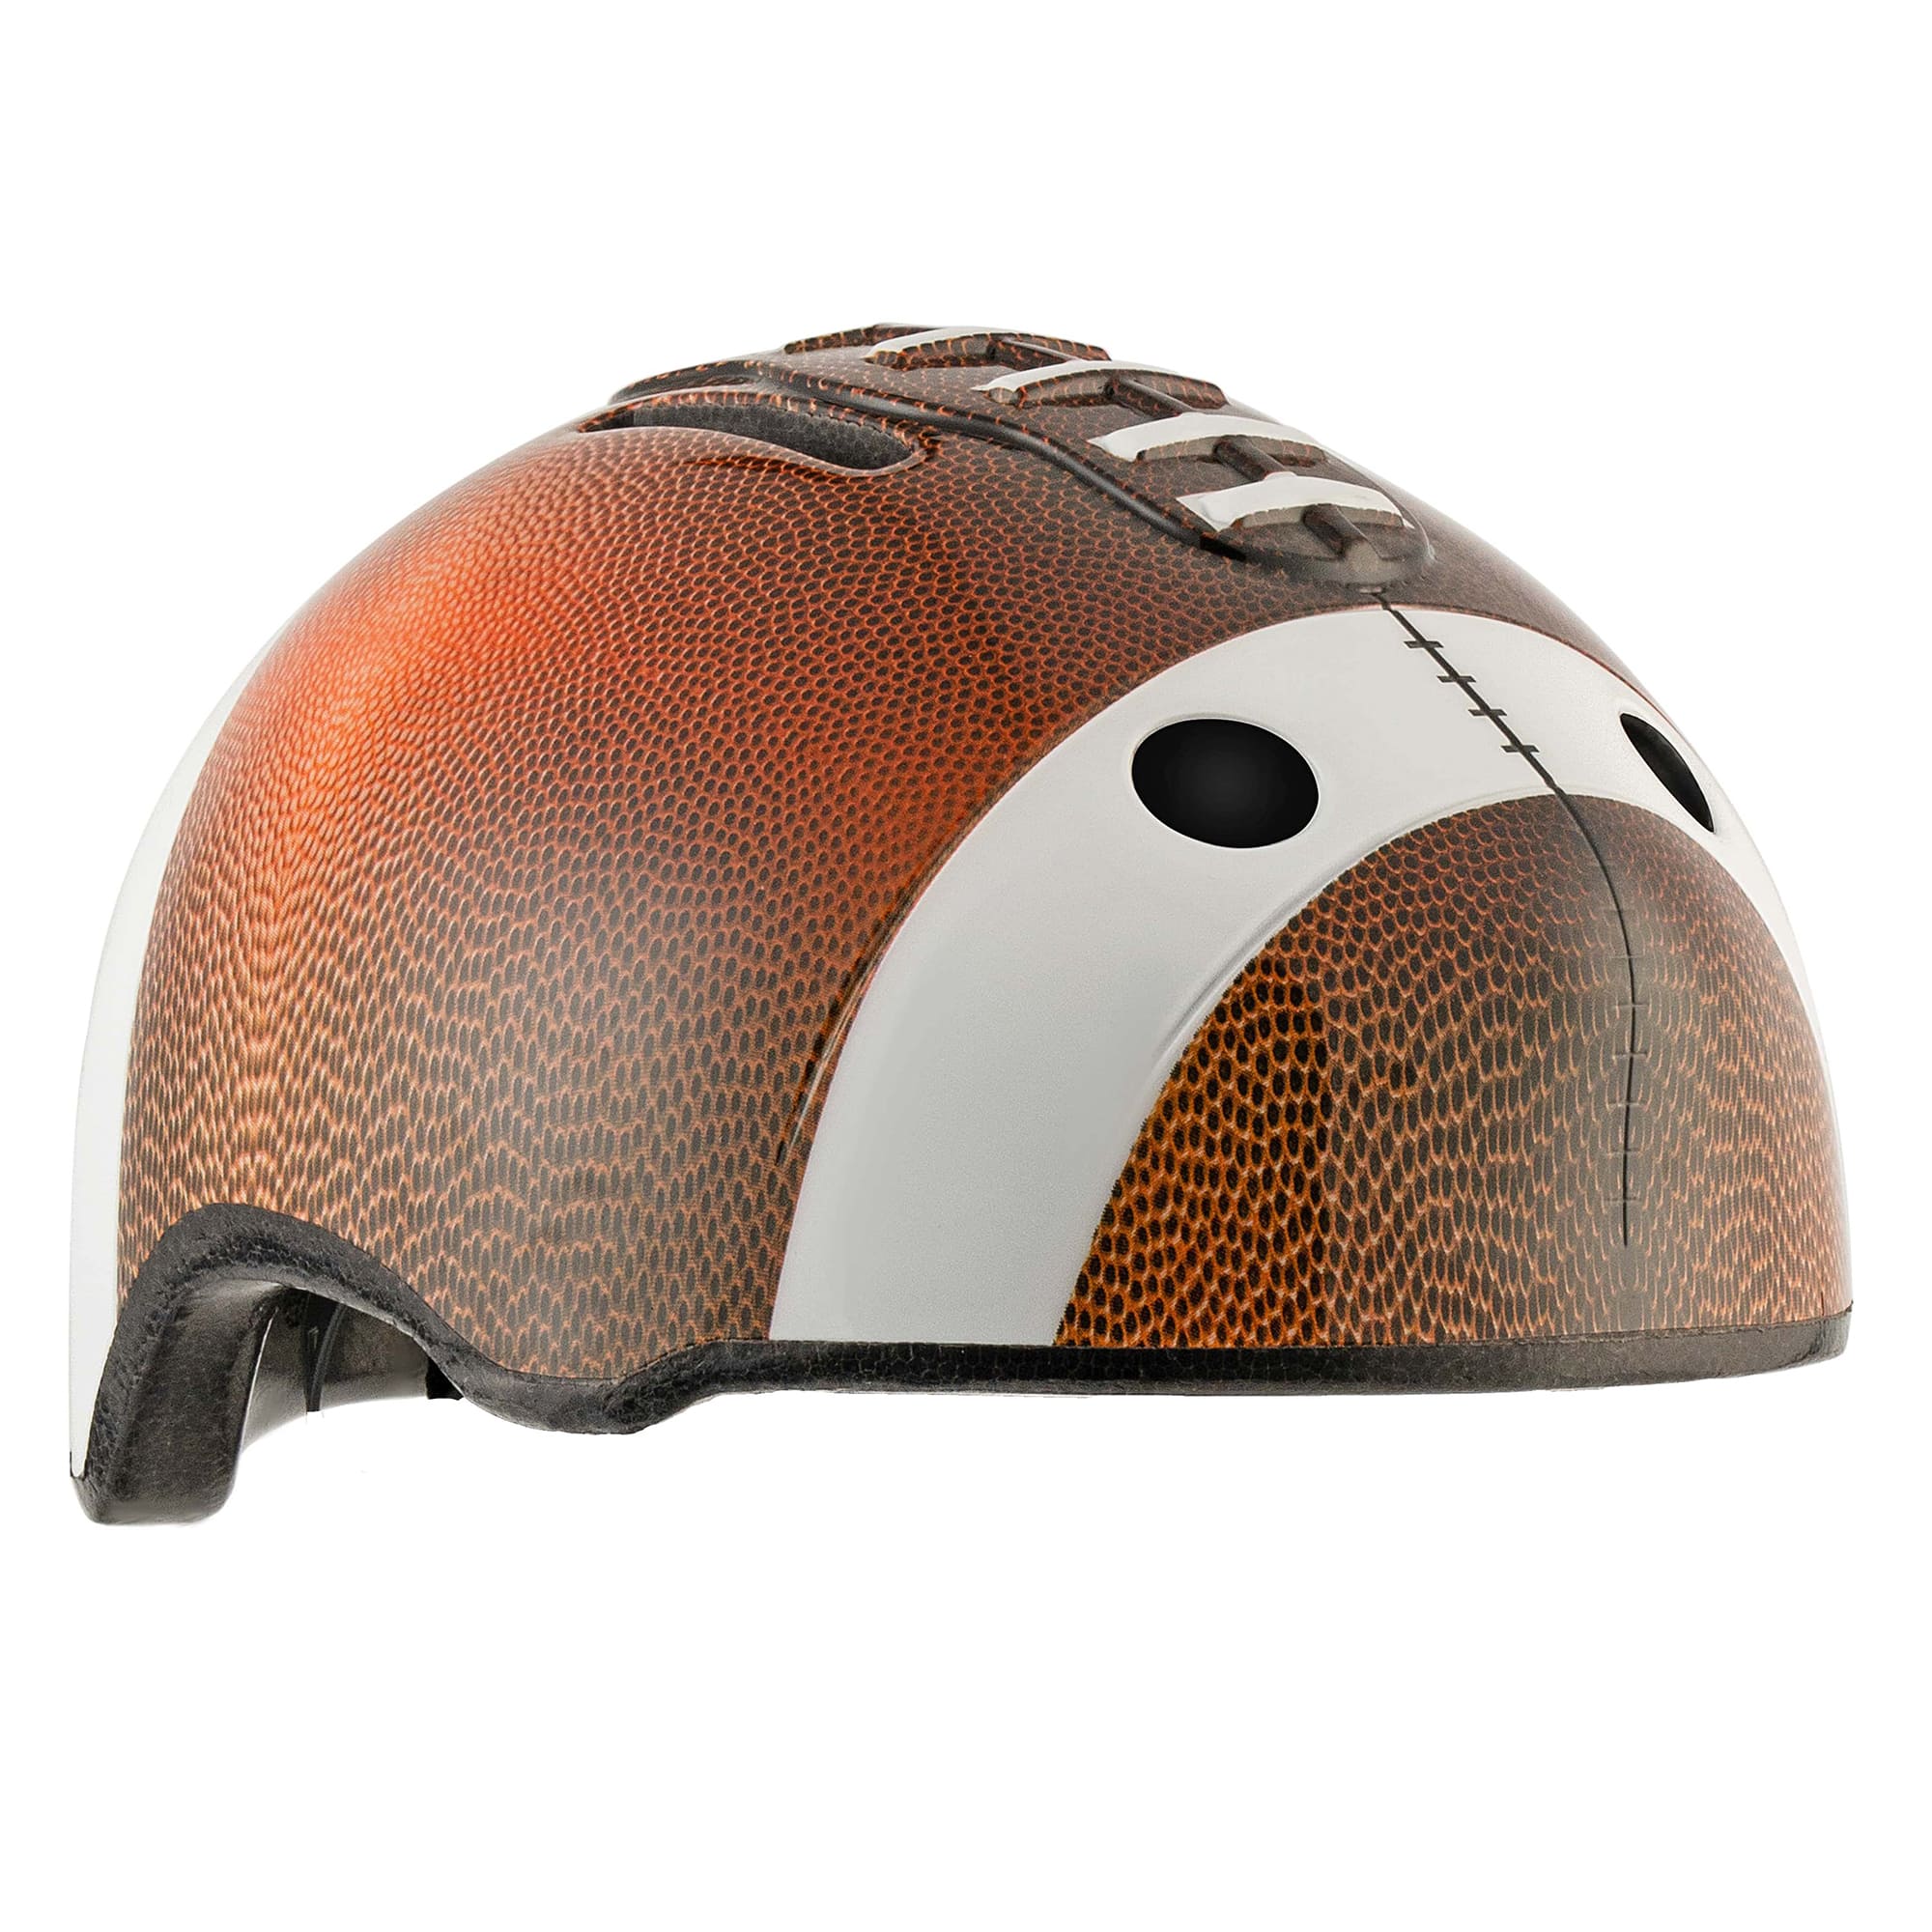 Crazy Safety - Football Bicycle Helmet - Brown (103001-01) - Leker